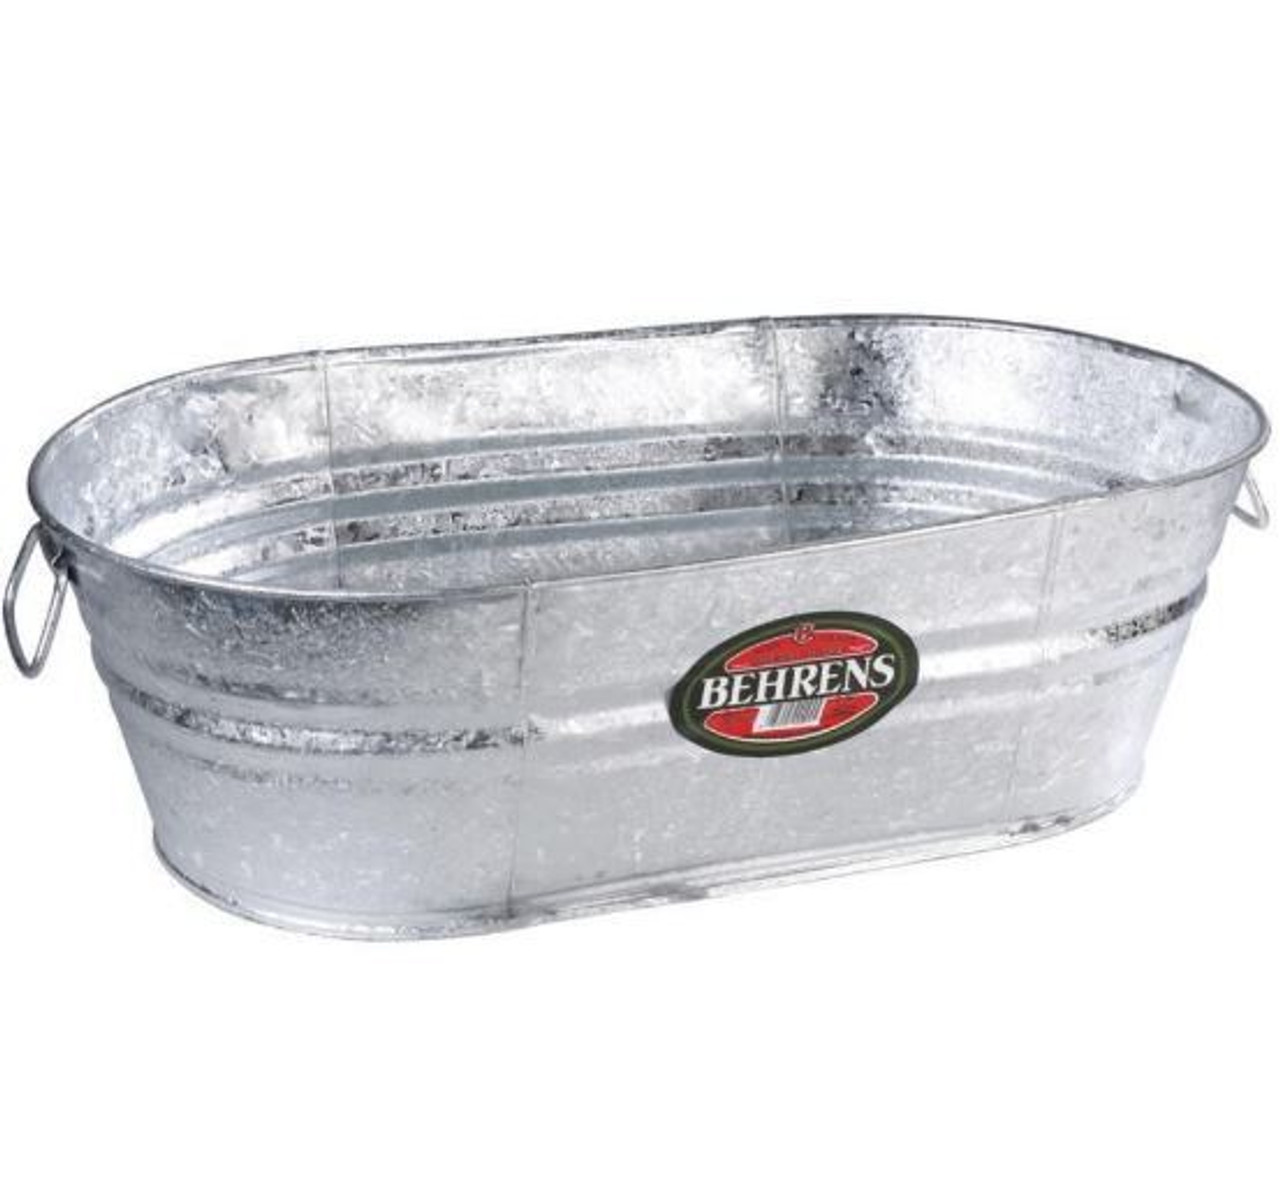 Twine Country Home Galvanized Ice Bucket